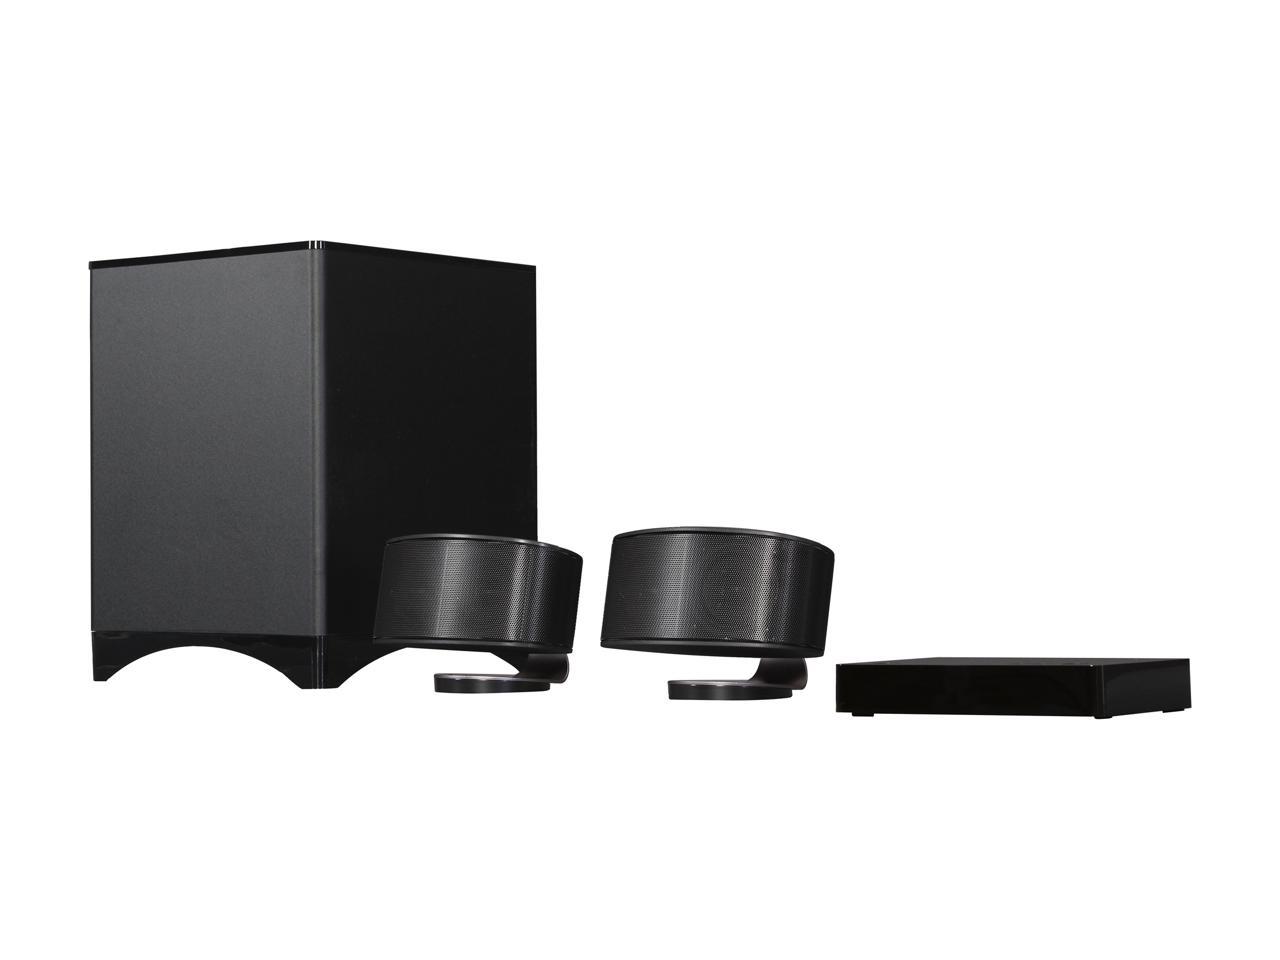 Graag gedaan Onrustig media Onkyo LS3100 Bluetooth Speaker Envision Cinema 2.1 System - Newegg.com